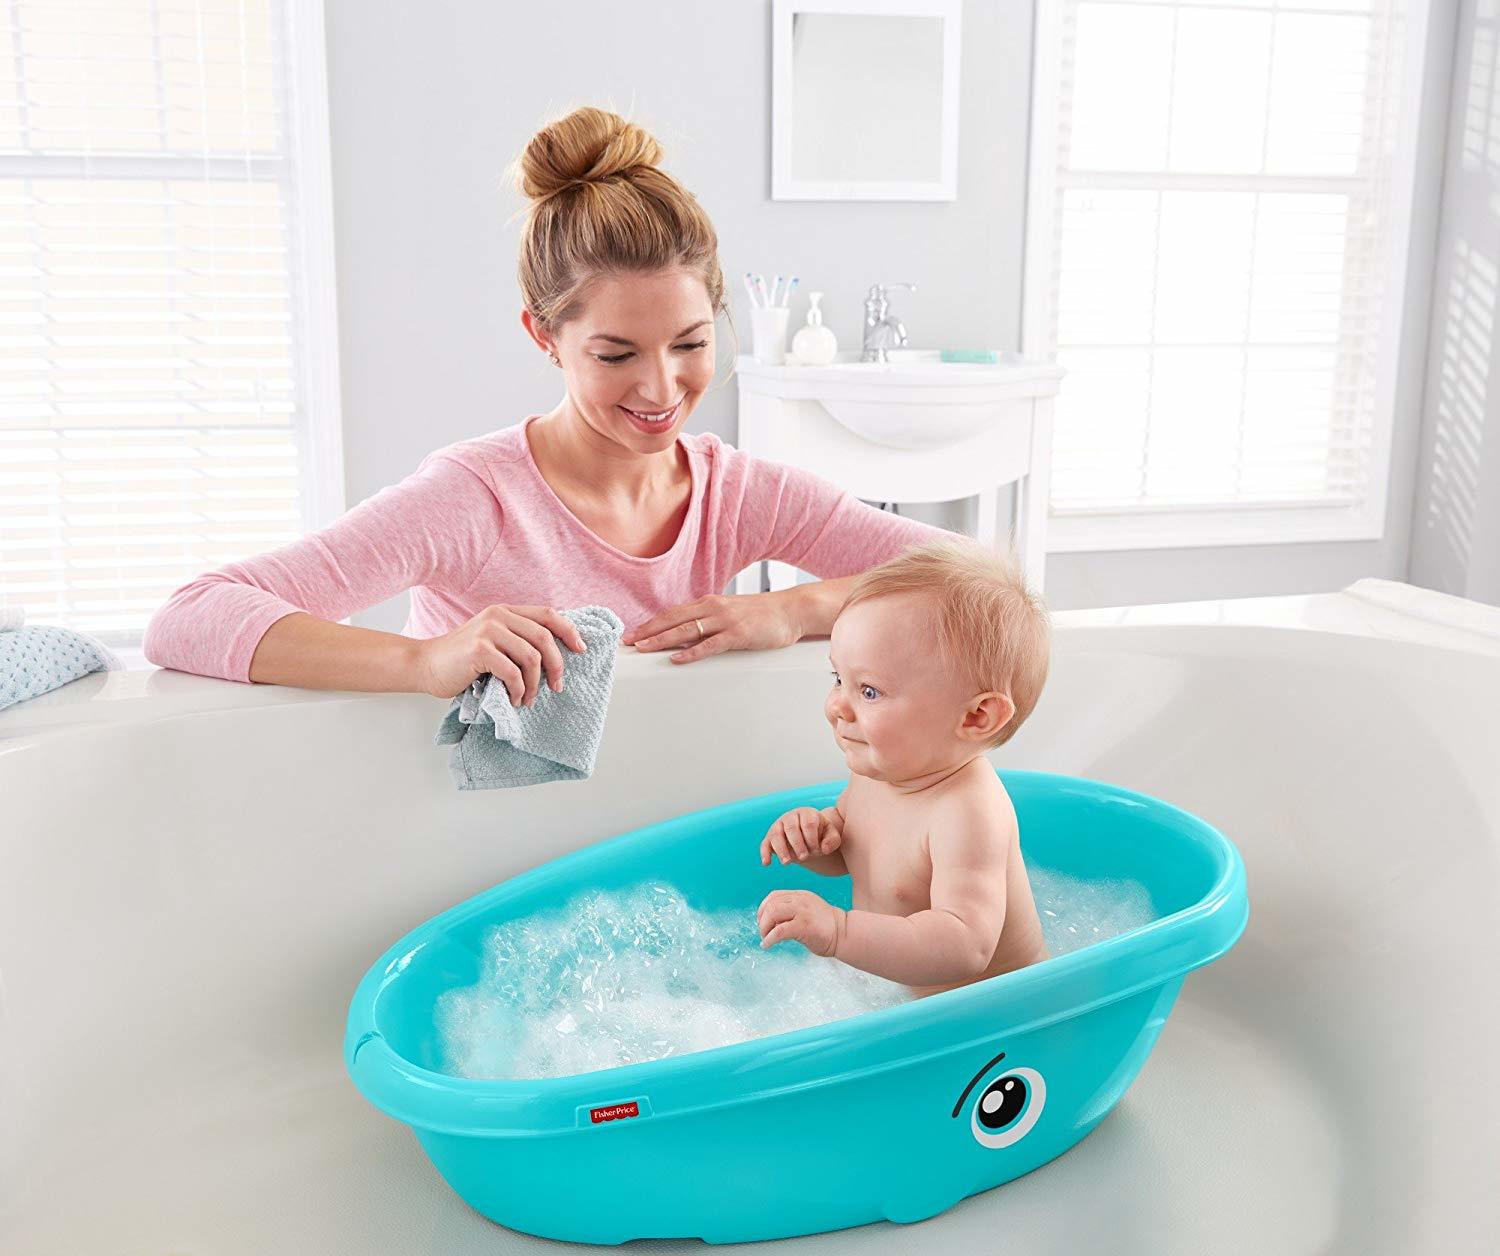 Fisher Price Whale of a tub bathtub 15